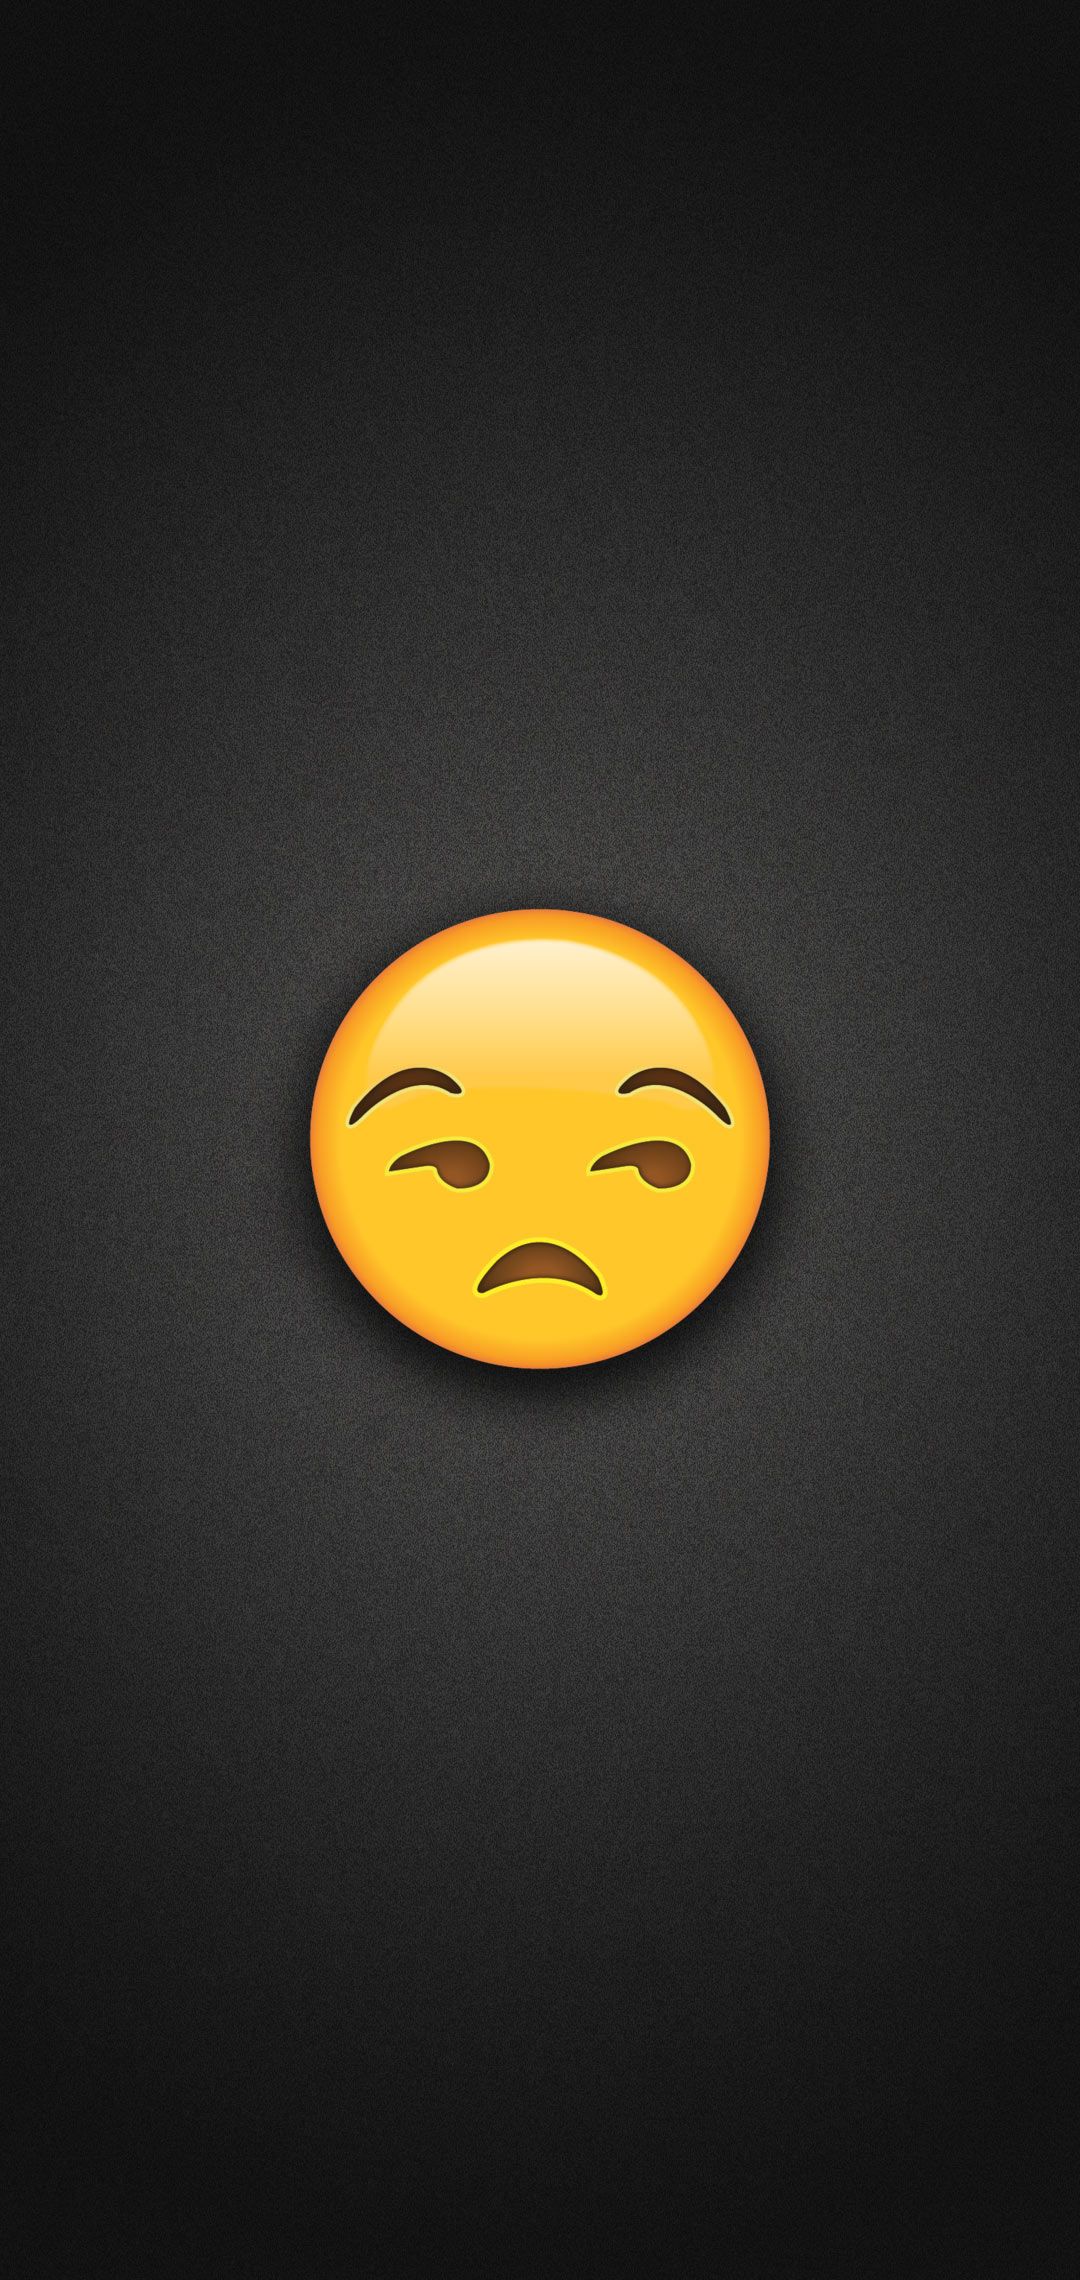 A black wallpaper with a yellow sad emoticon in the center - Emoji